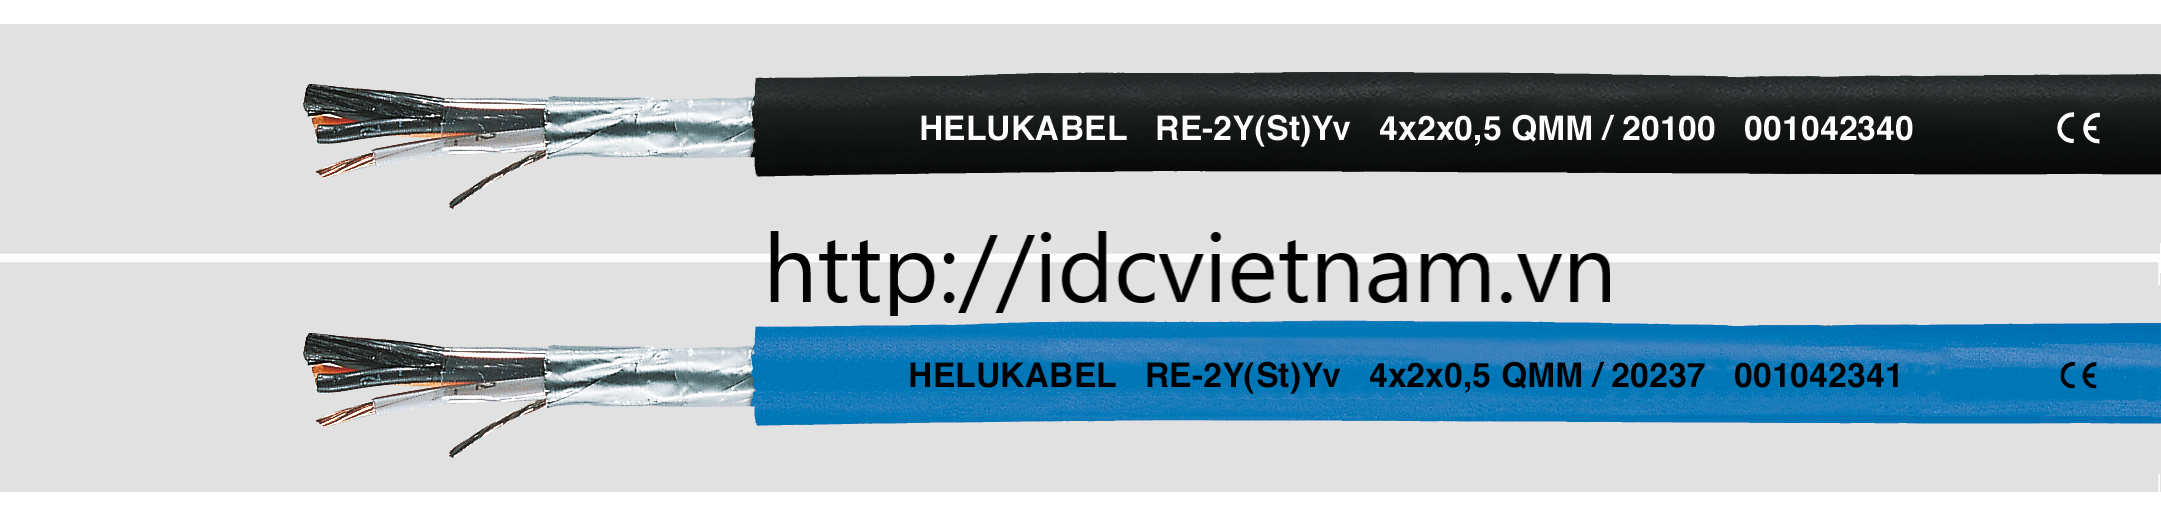 Helukabel RE-2Y(St)Yv 2x2x0,5mm2 BU (20236)